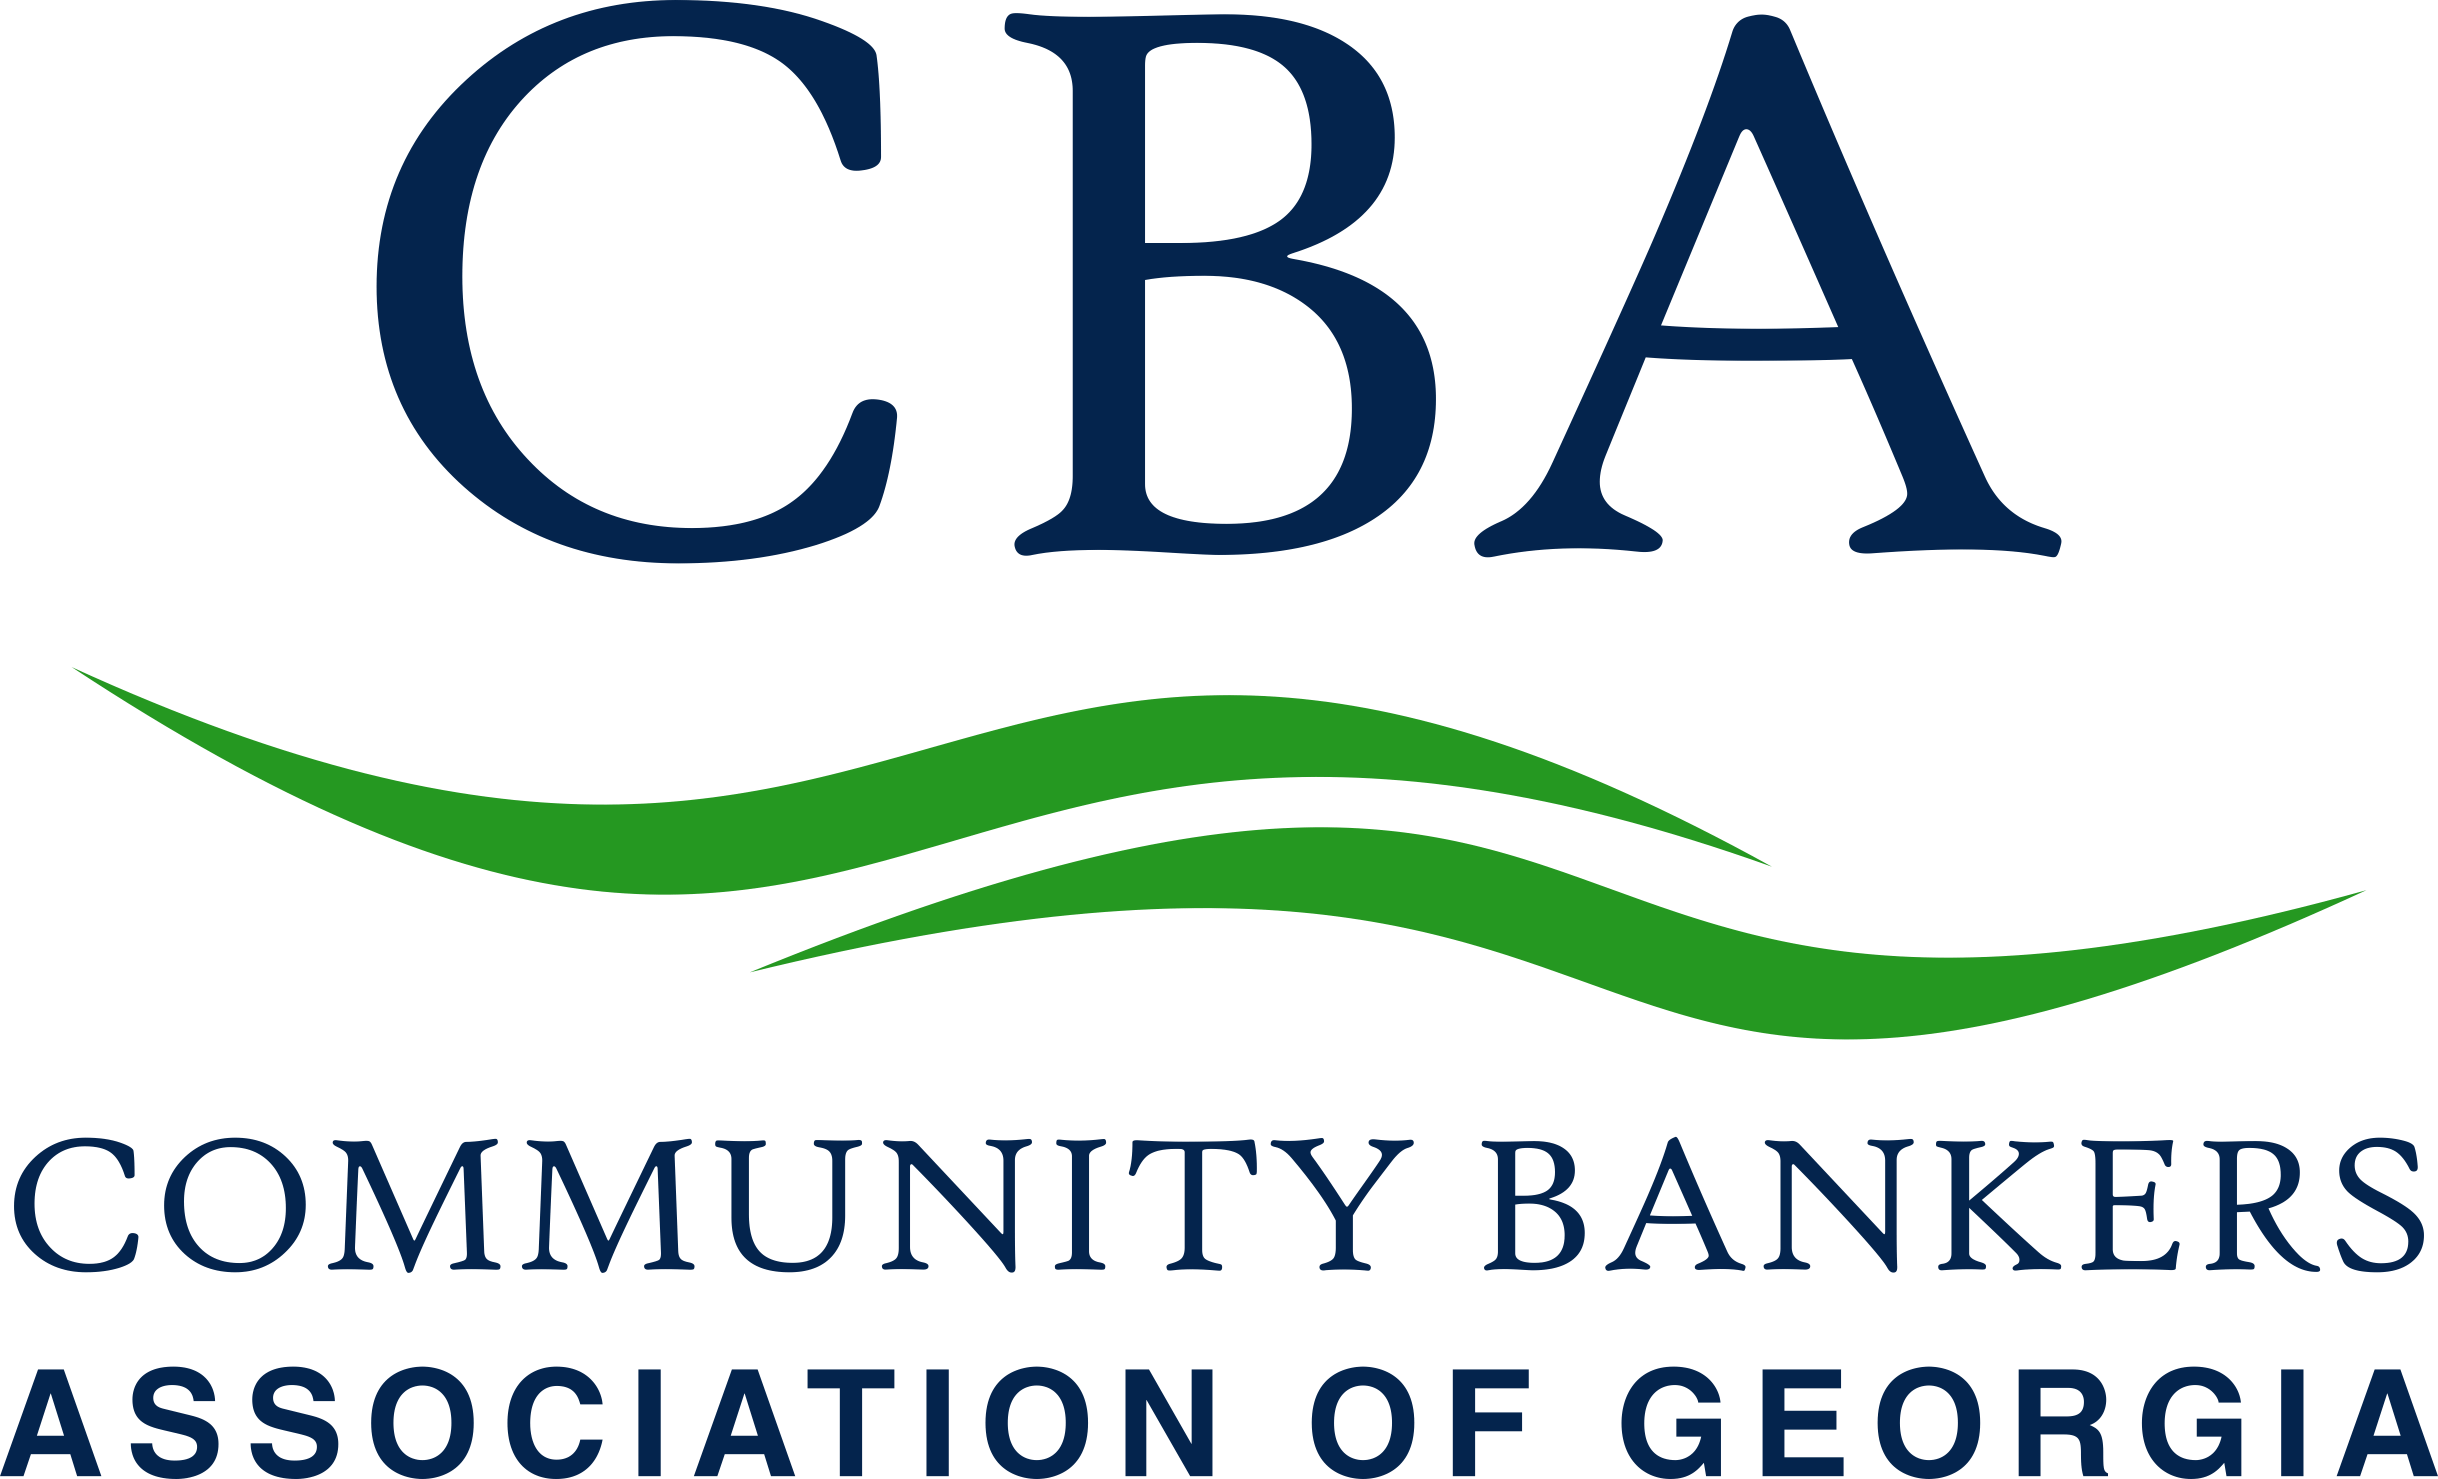 Community Bankers Association Of Georgia Logo